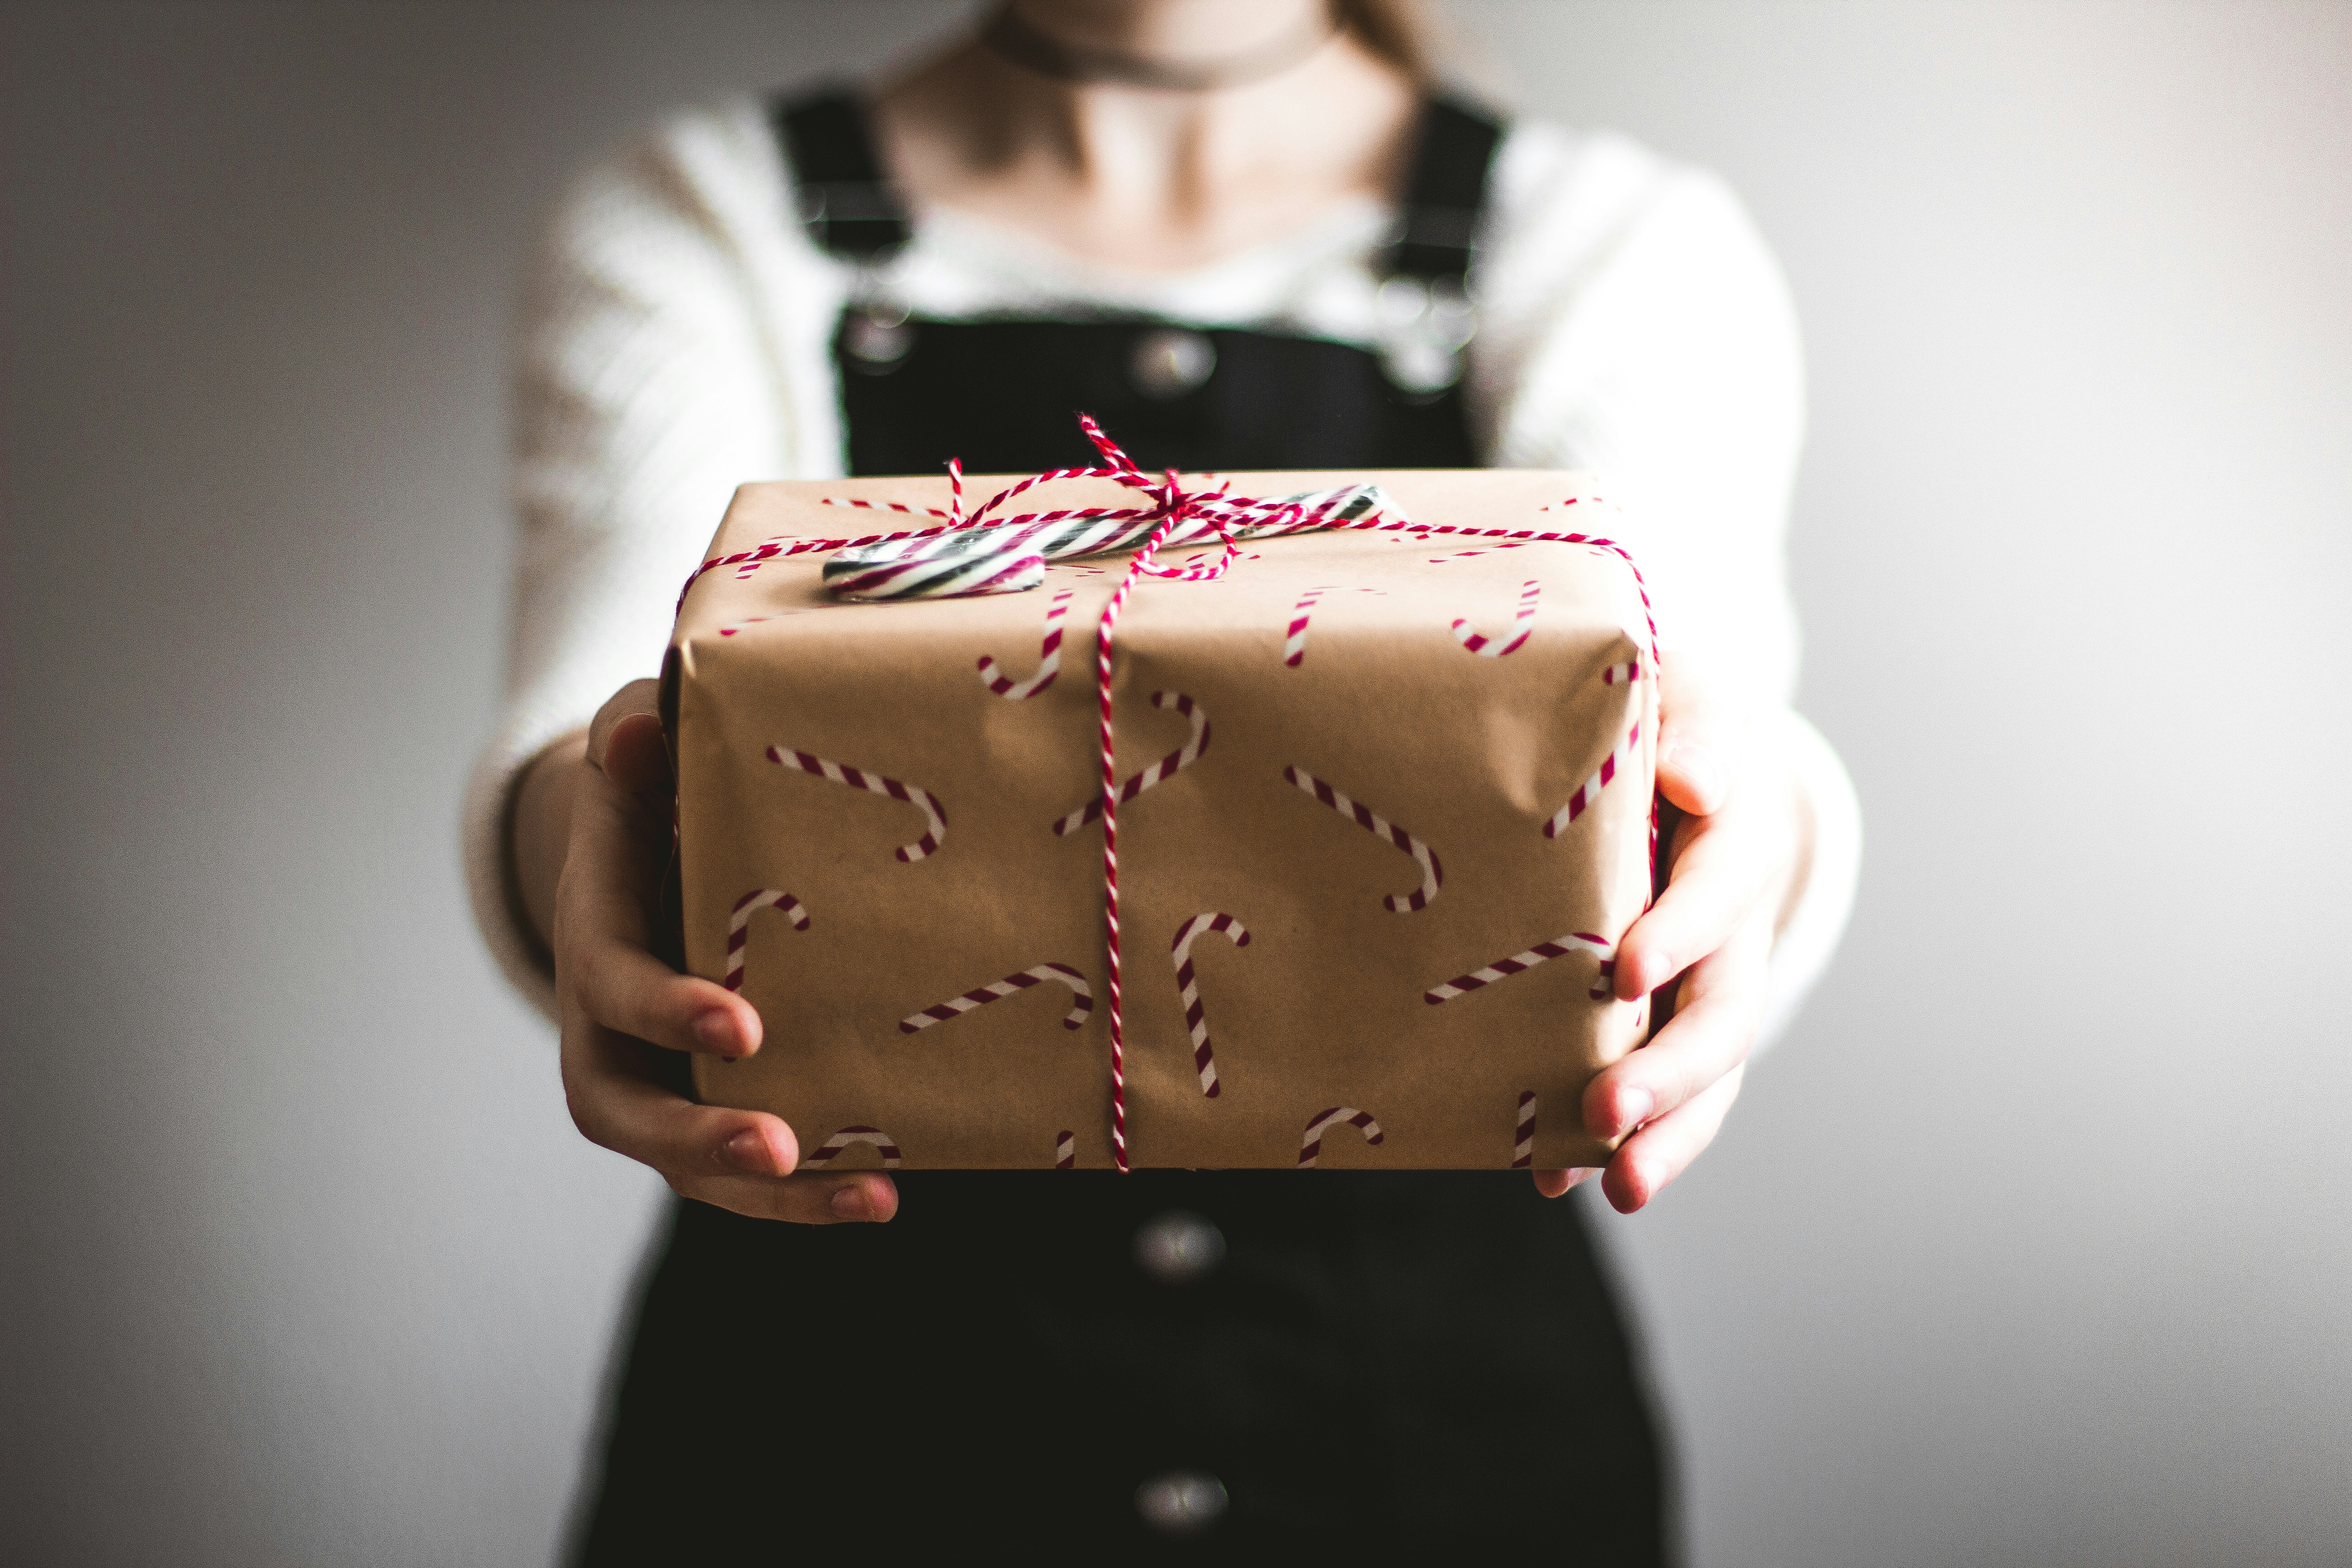 What Brandy Gift Sets Make Good Presents?